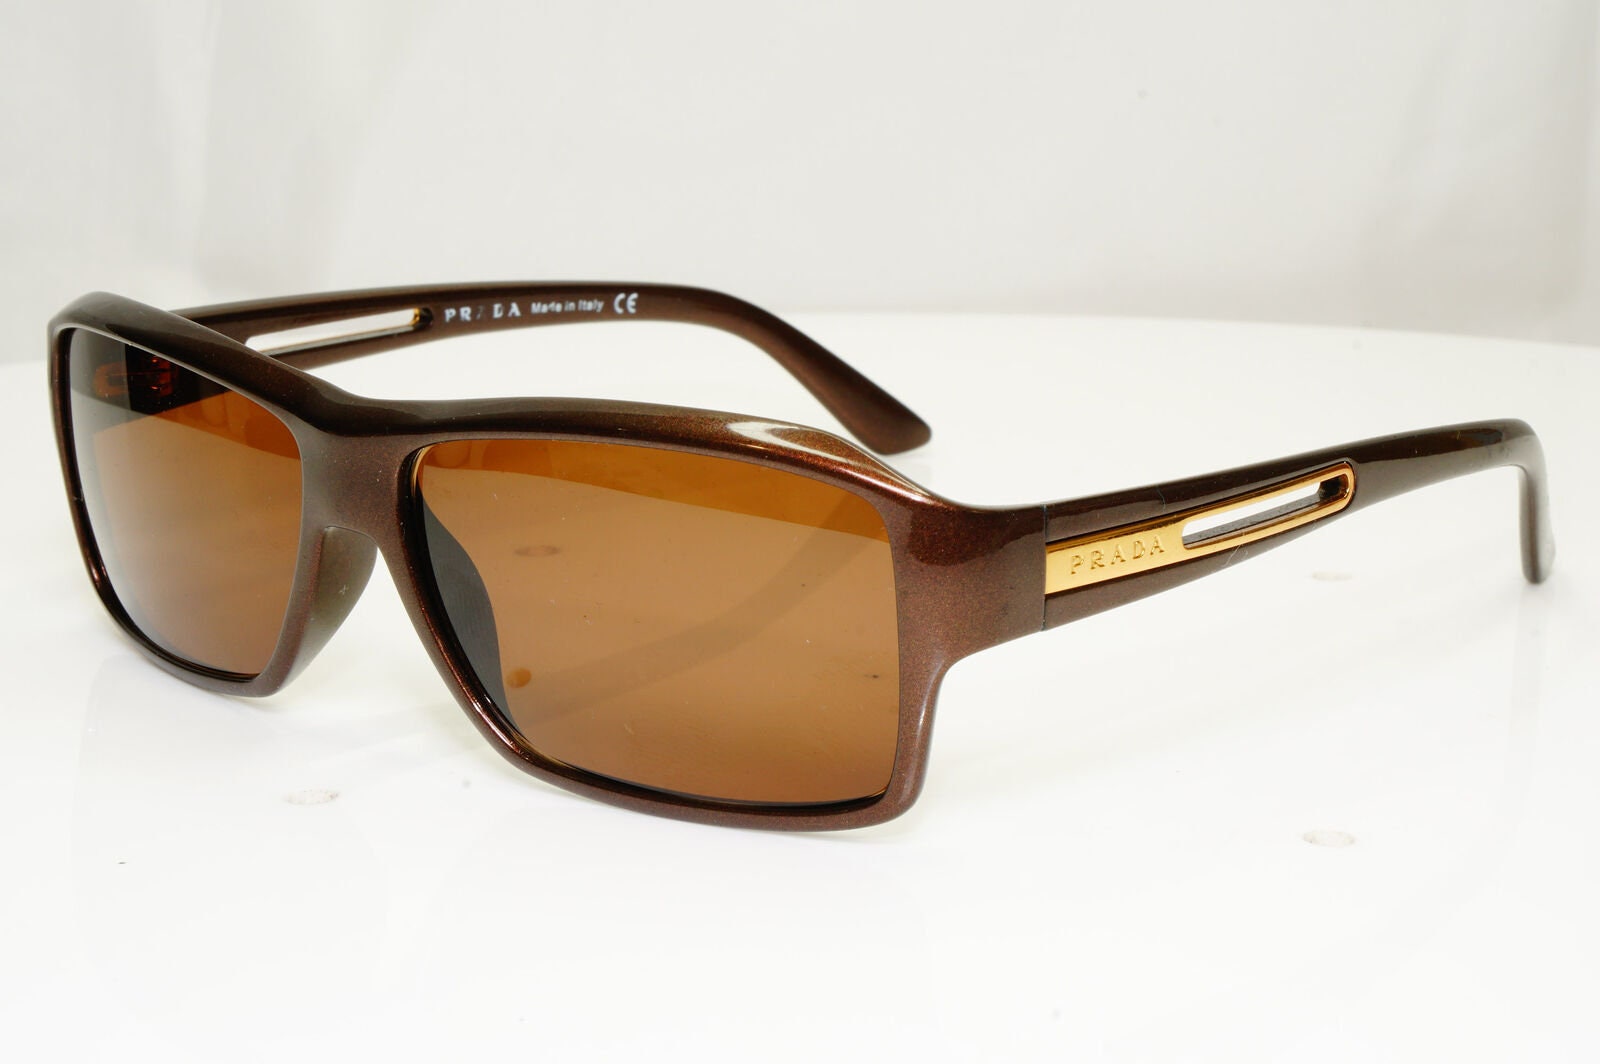 Authentic Prada Mens Vintage Sunglasses Brown Spr 09i 7bg-301 | Etsy